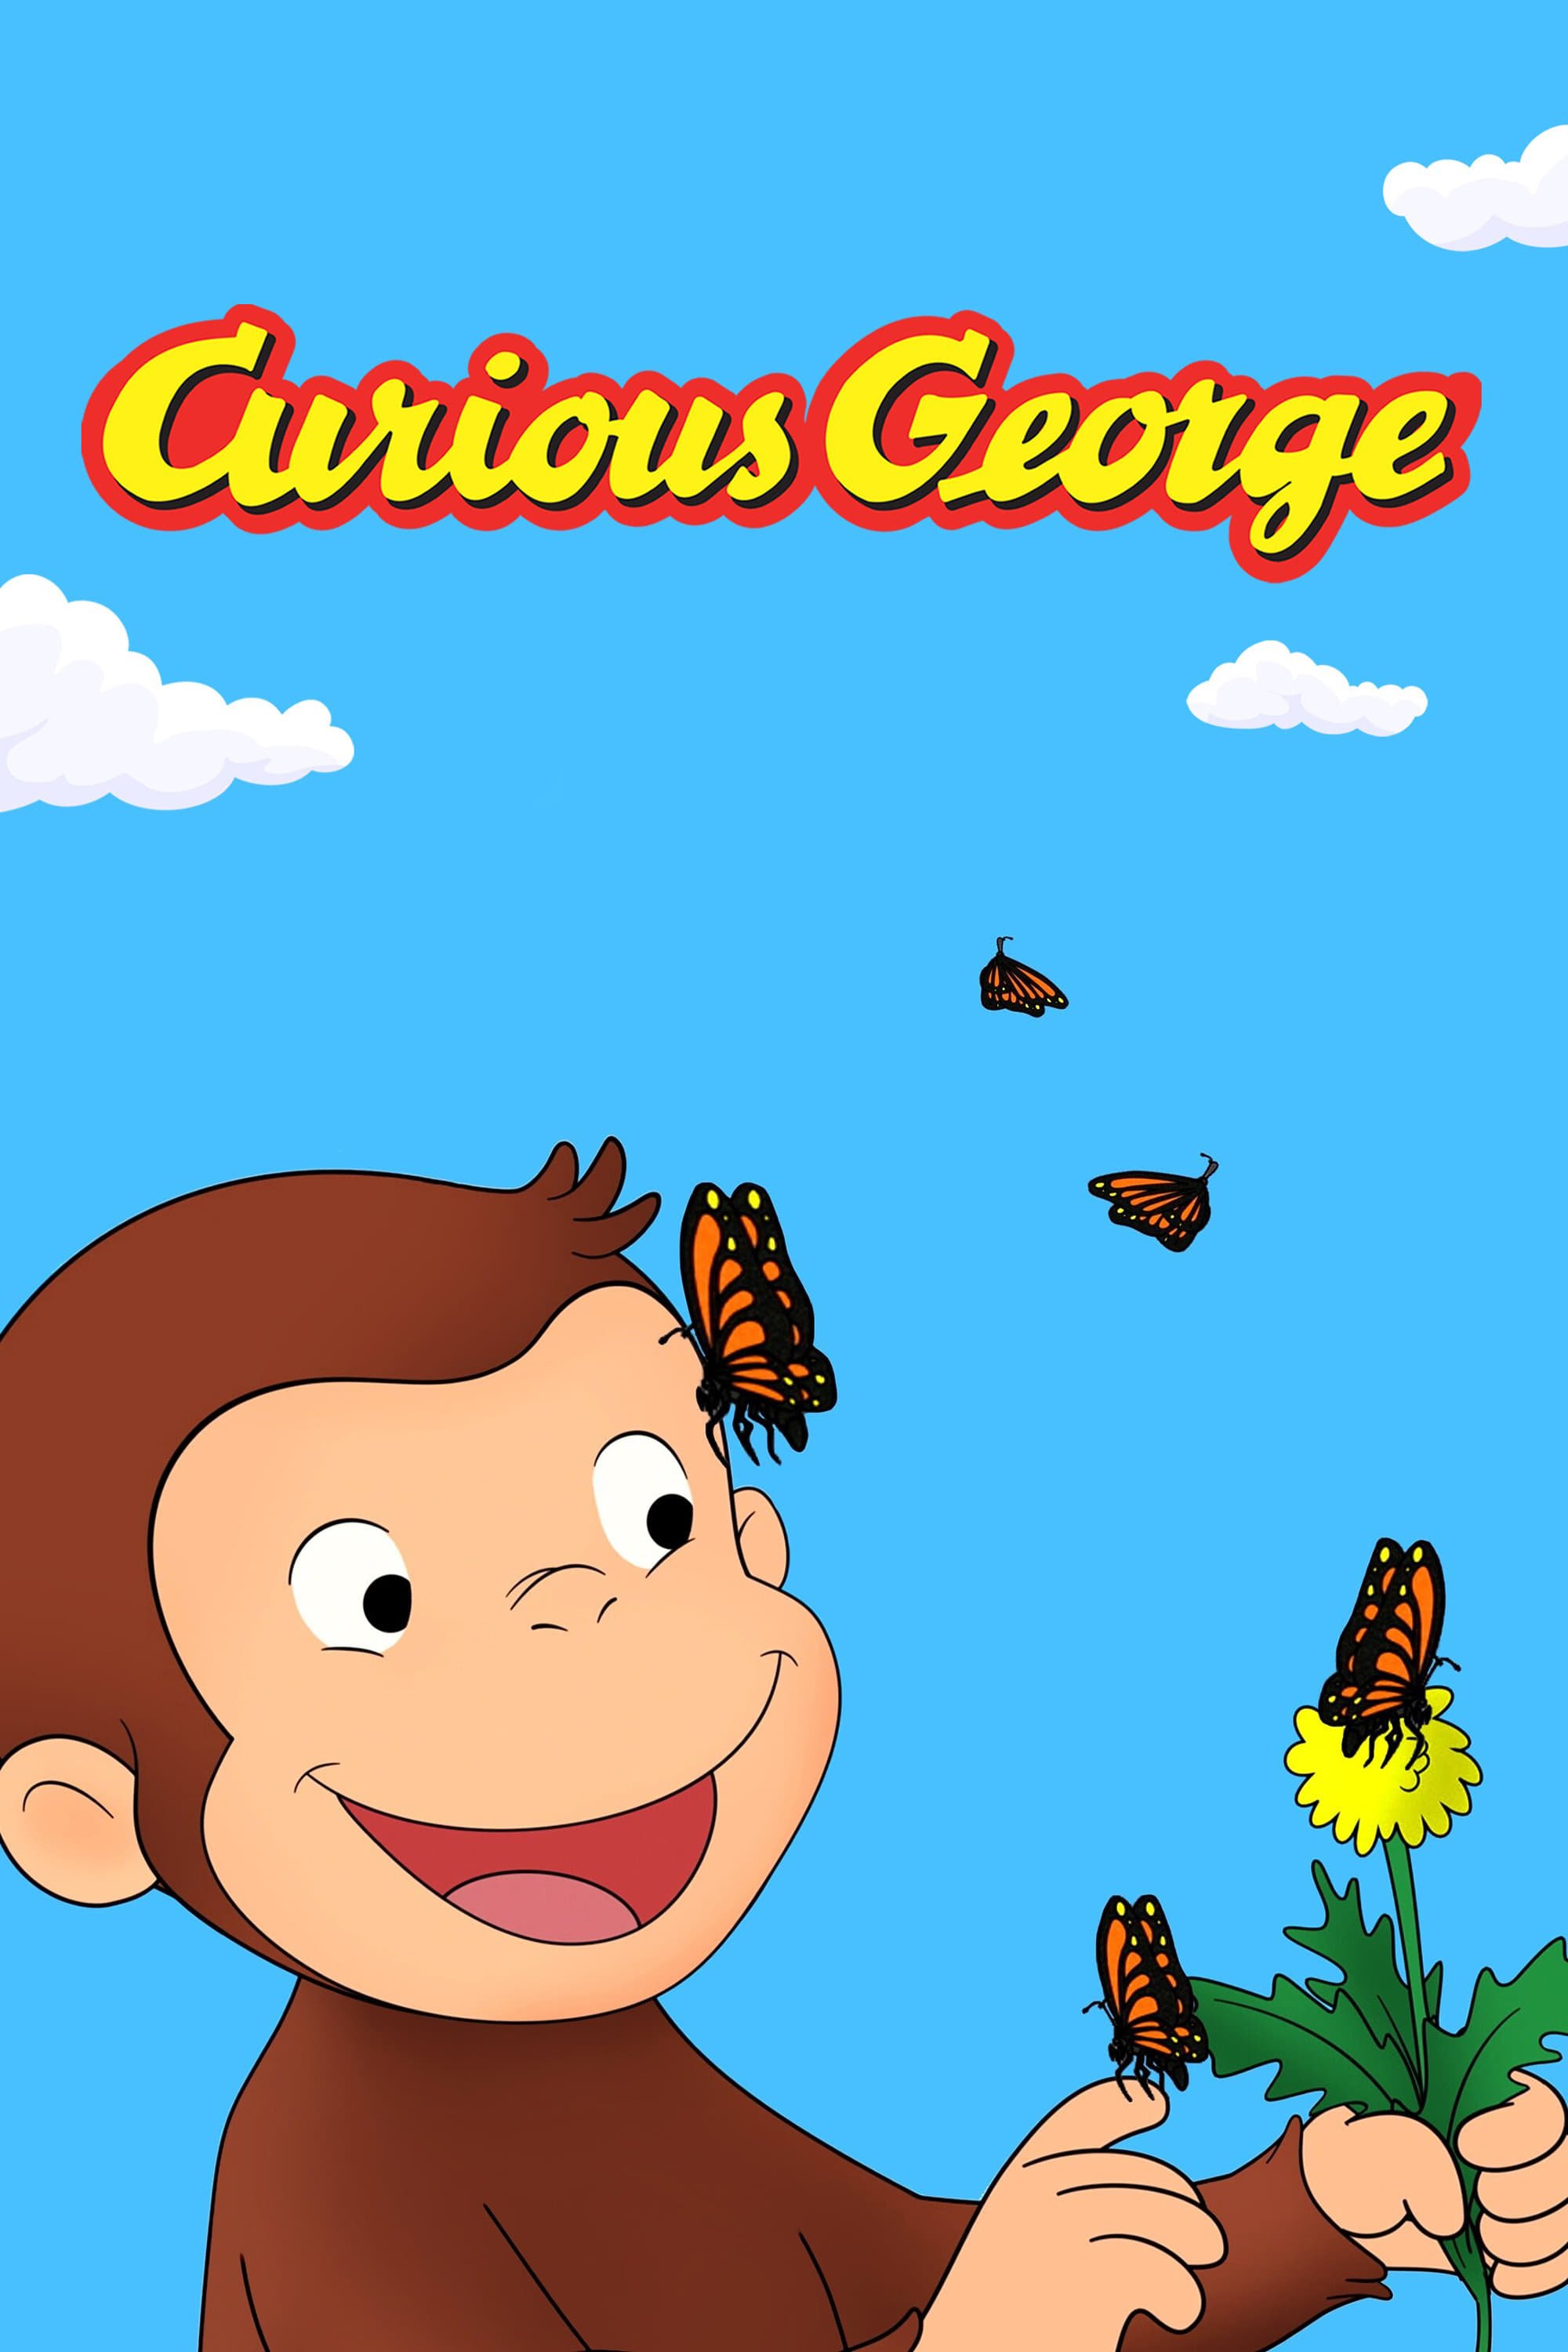 George, O Curioso